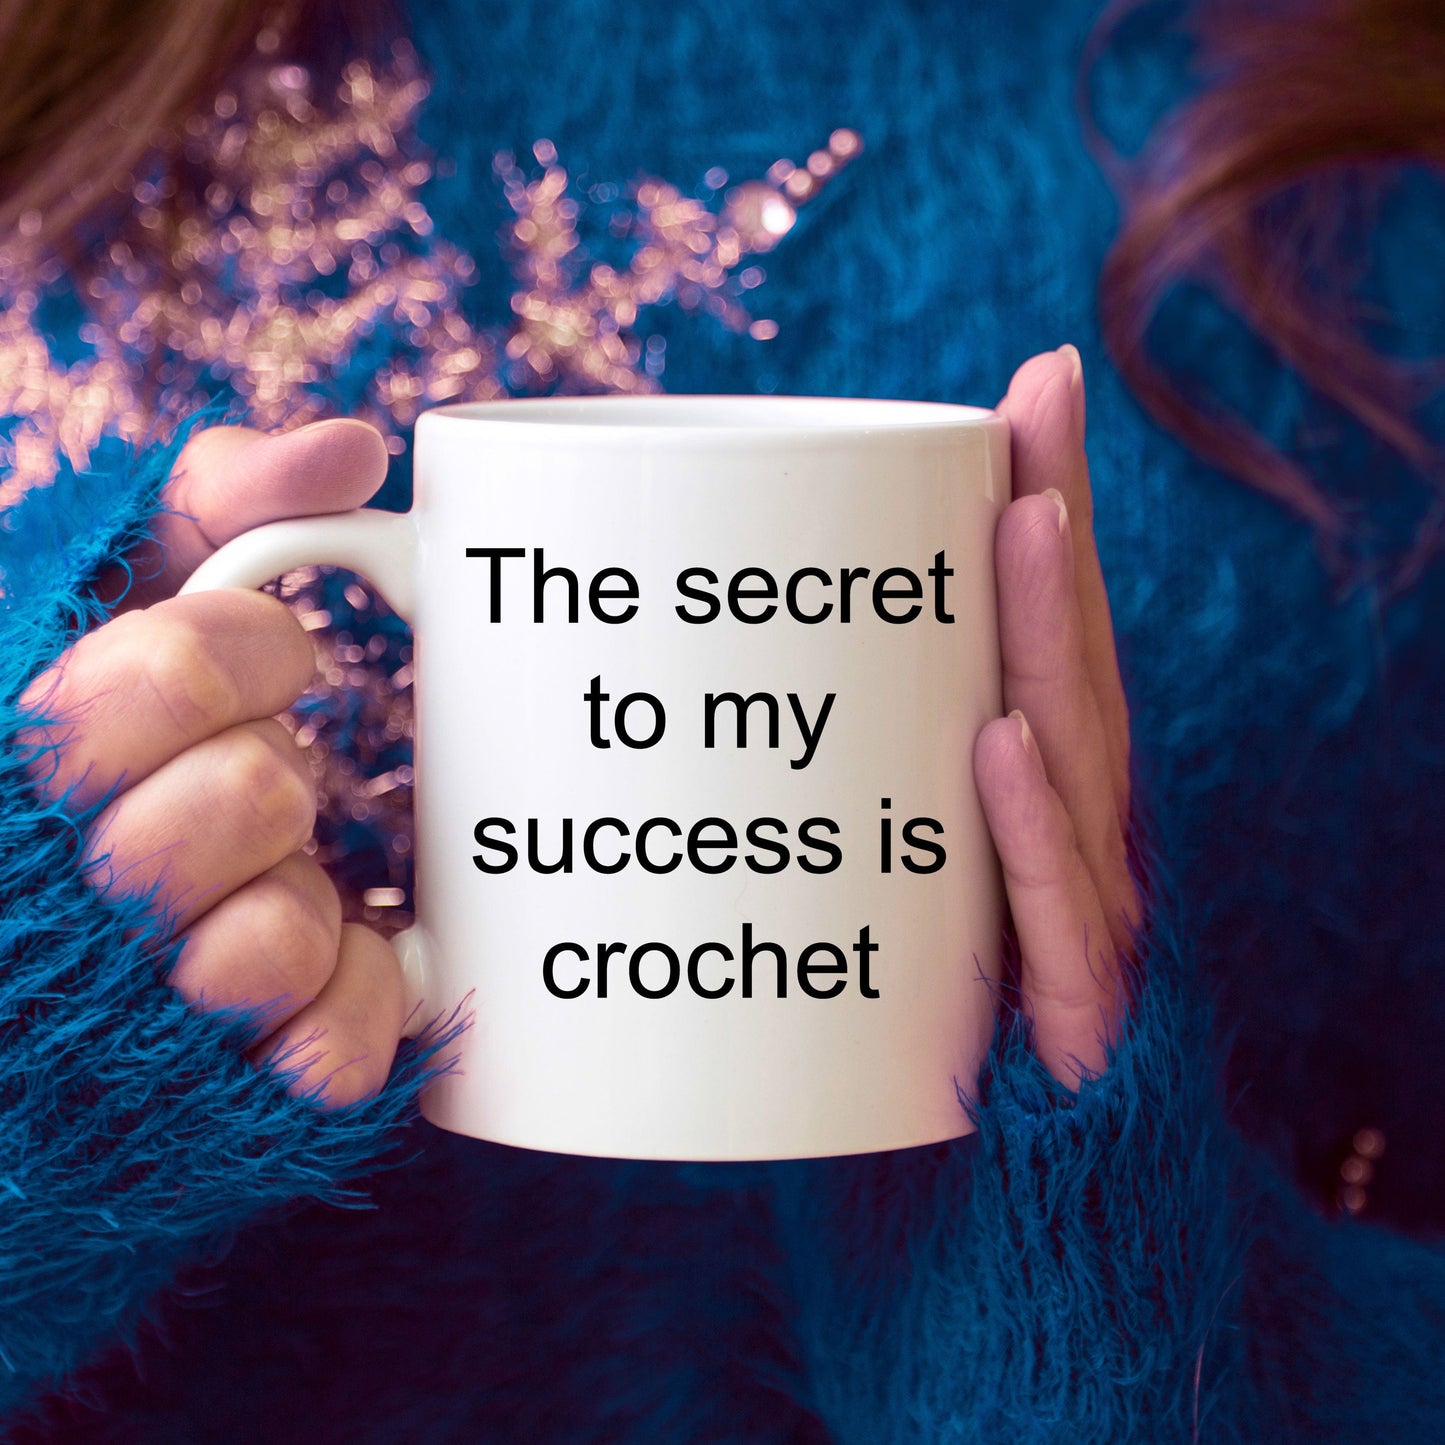 Crochet Lover Mug - The secret to my success is crochet funny coffee mug